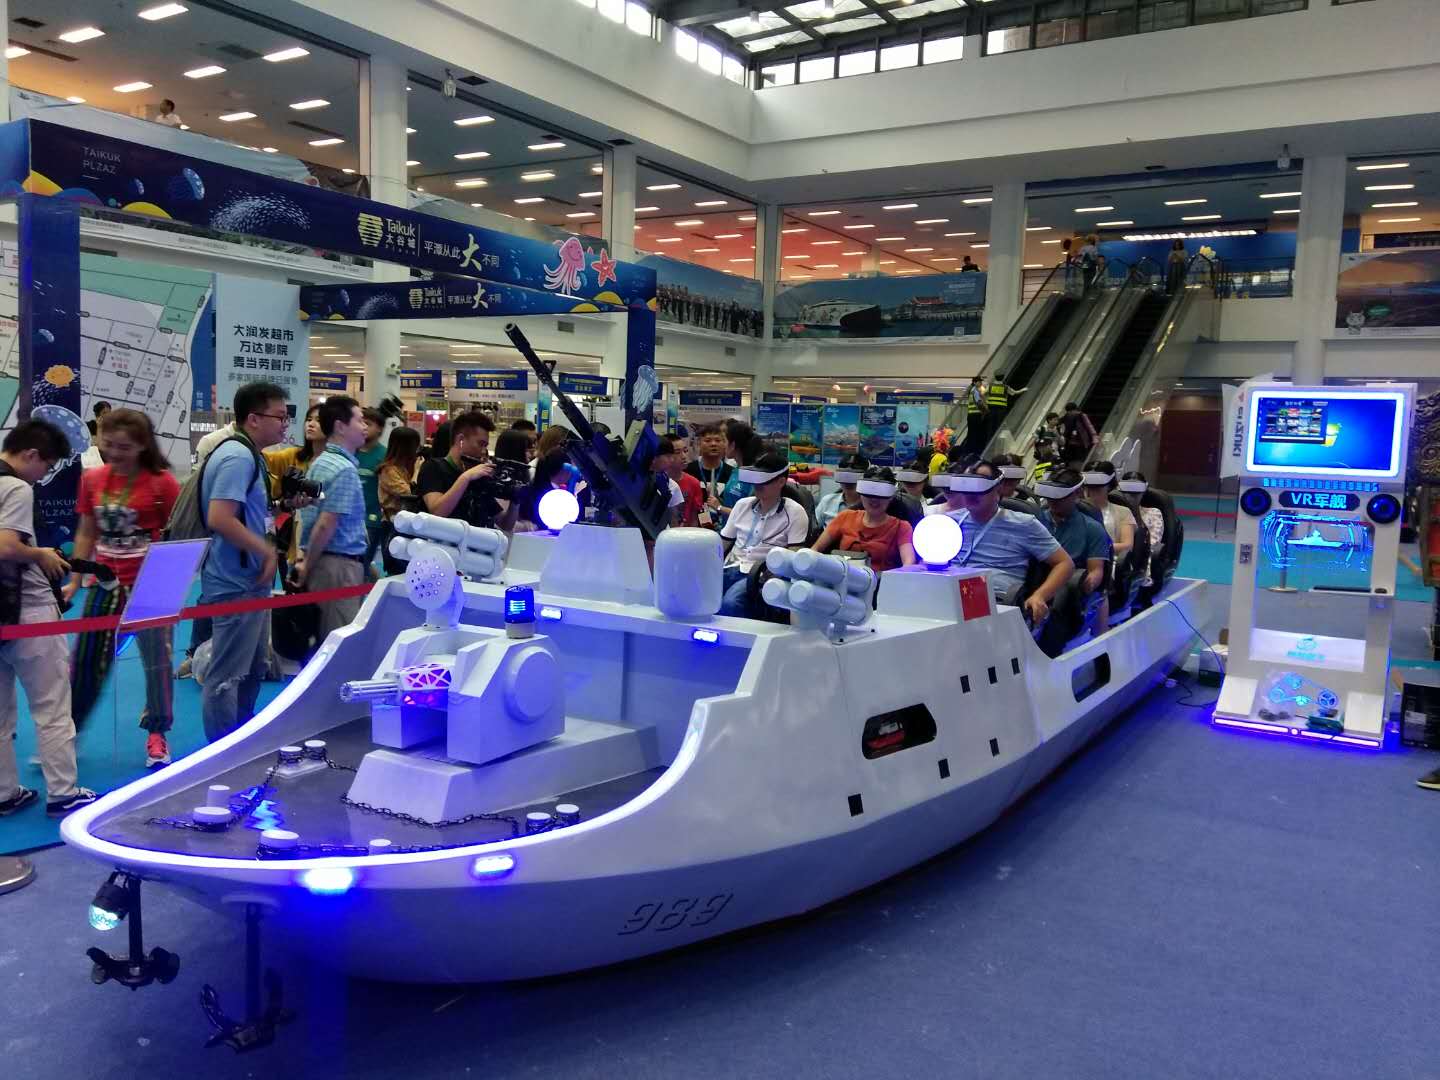 9DVR设备制造厂家深圳精敏VR蛟龙号军舰实力亮相